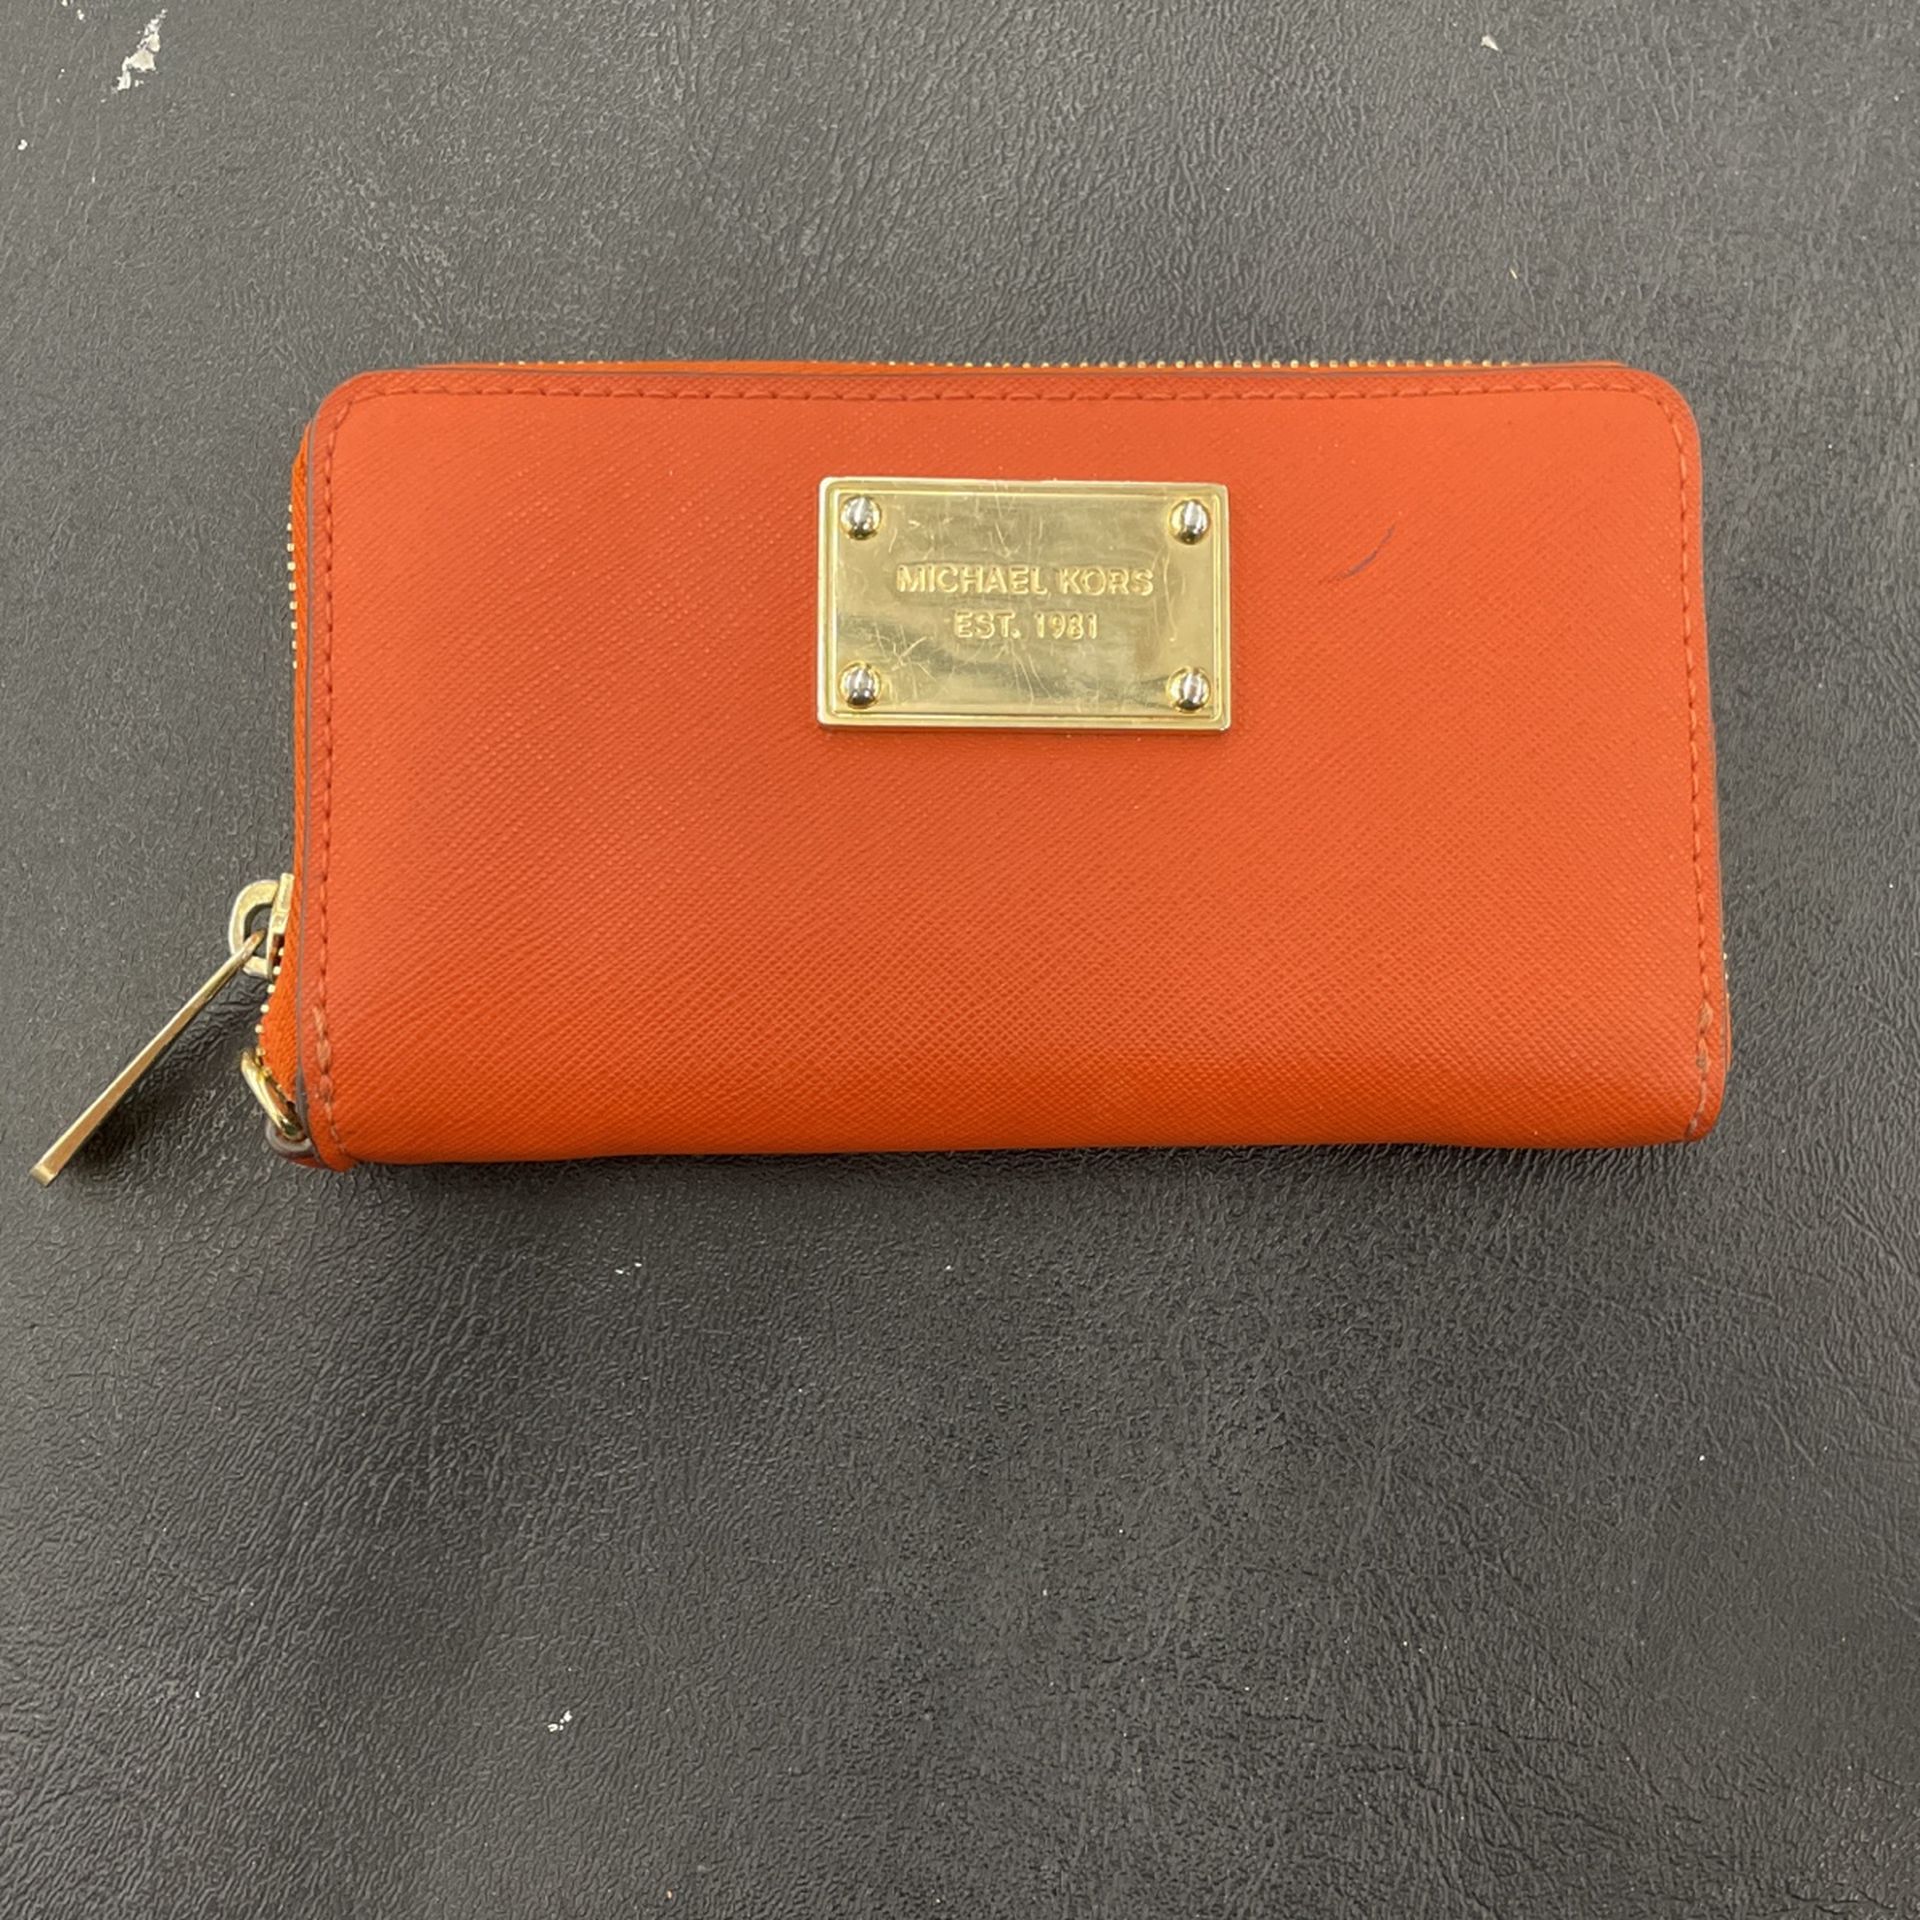 Michael Kors Orange Wallet. Item No 124 (Shopgoodwill)